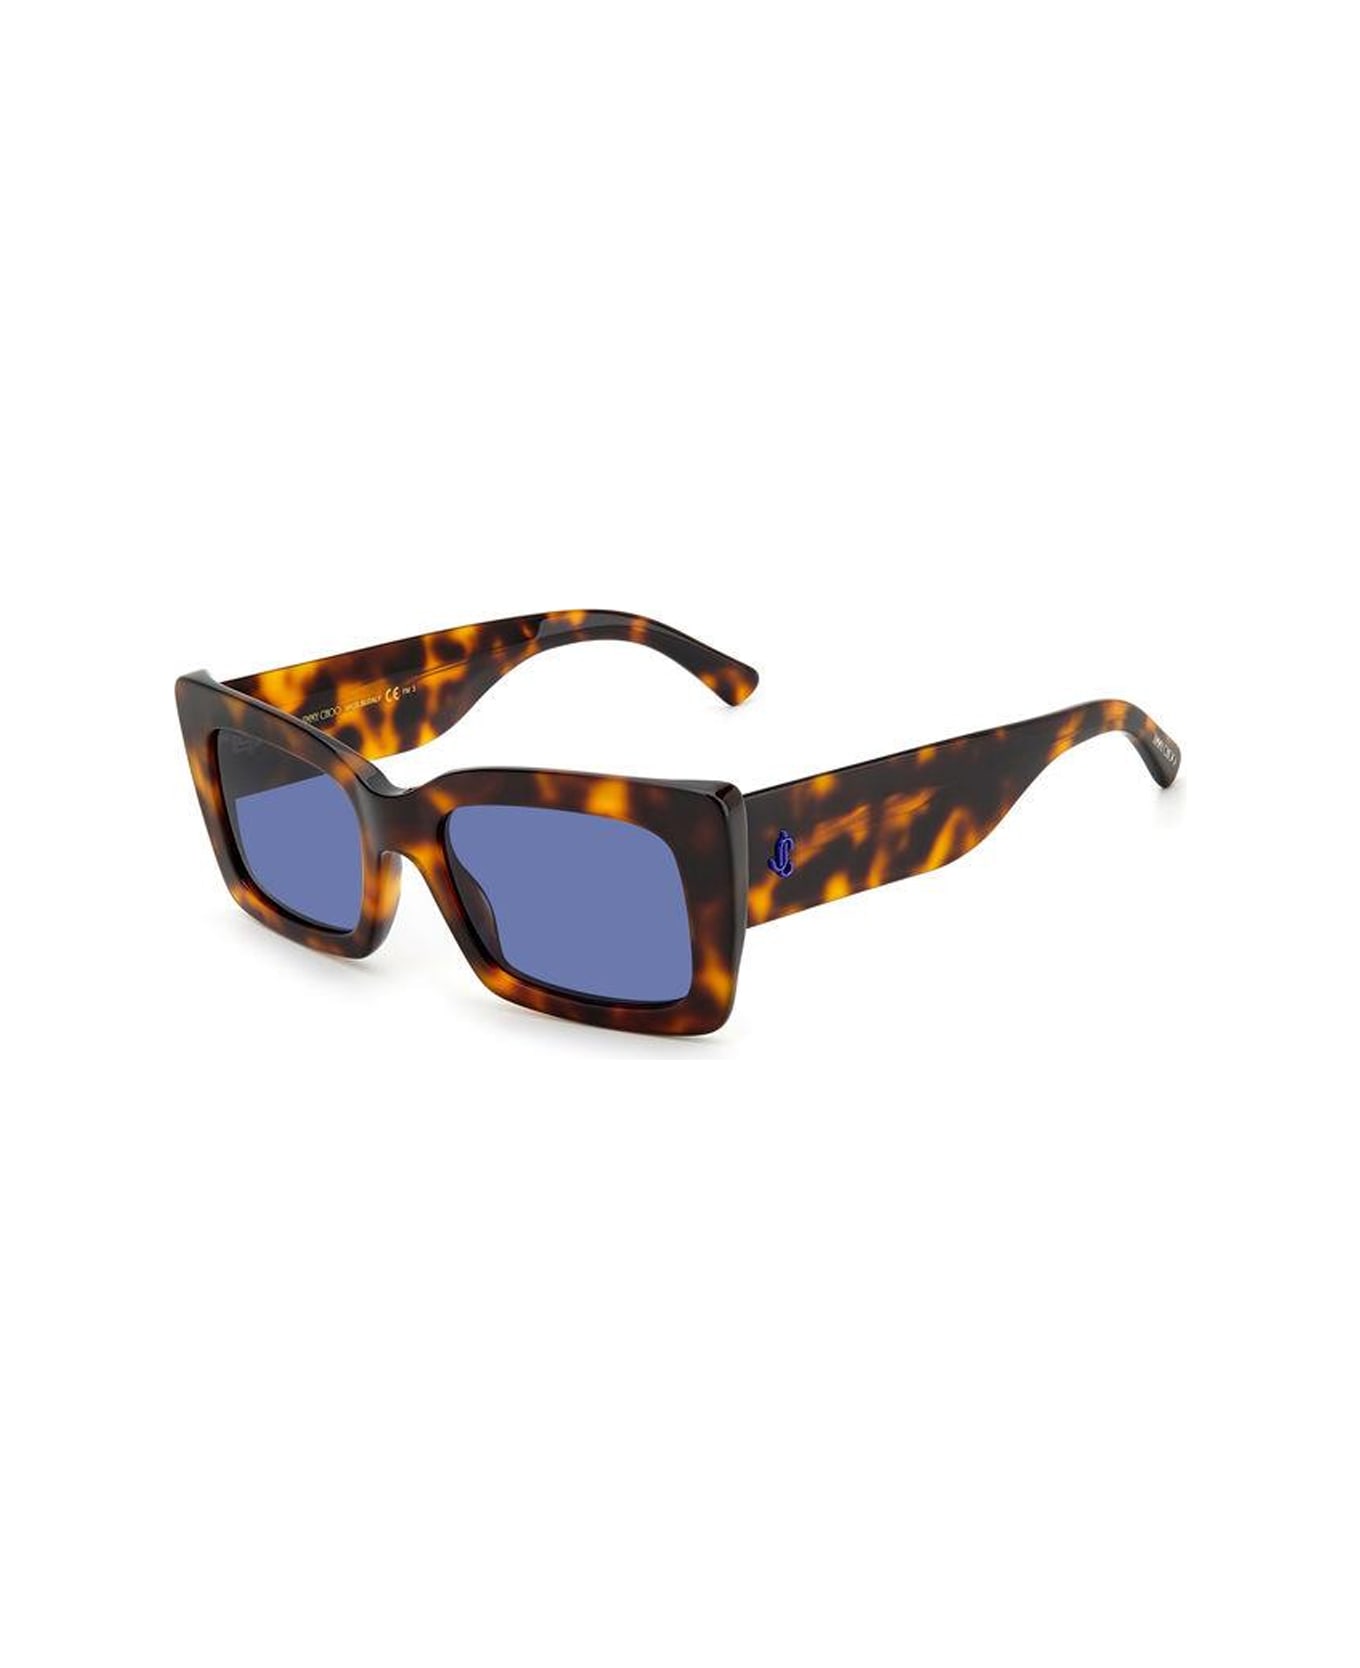 Jimmy Choo Eyewear Vita/s Sunglasses rossa - Marrone